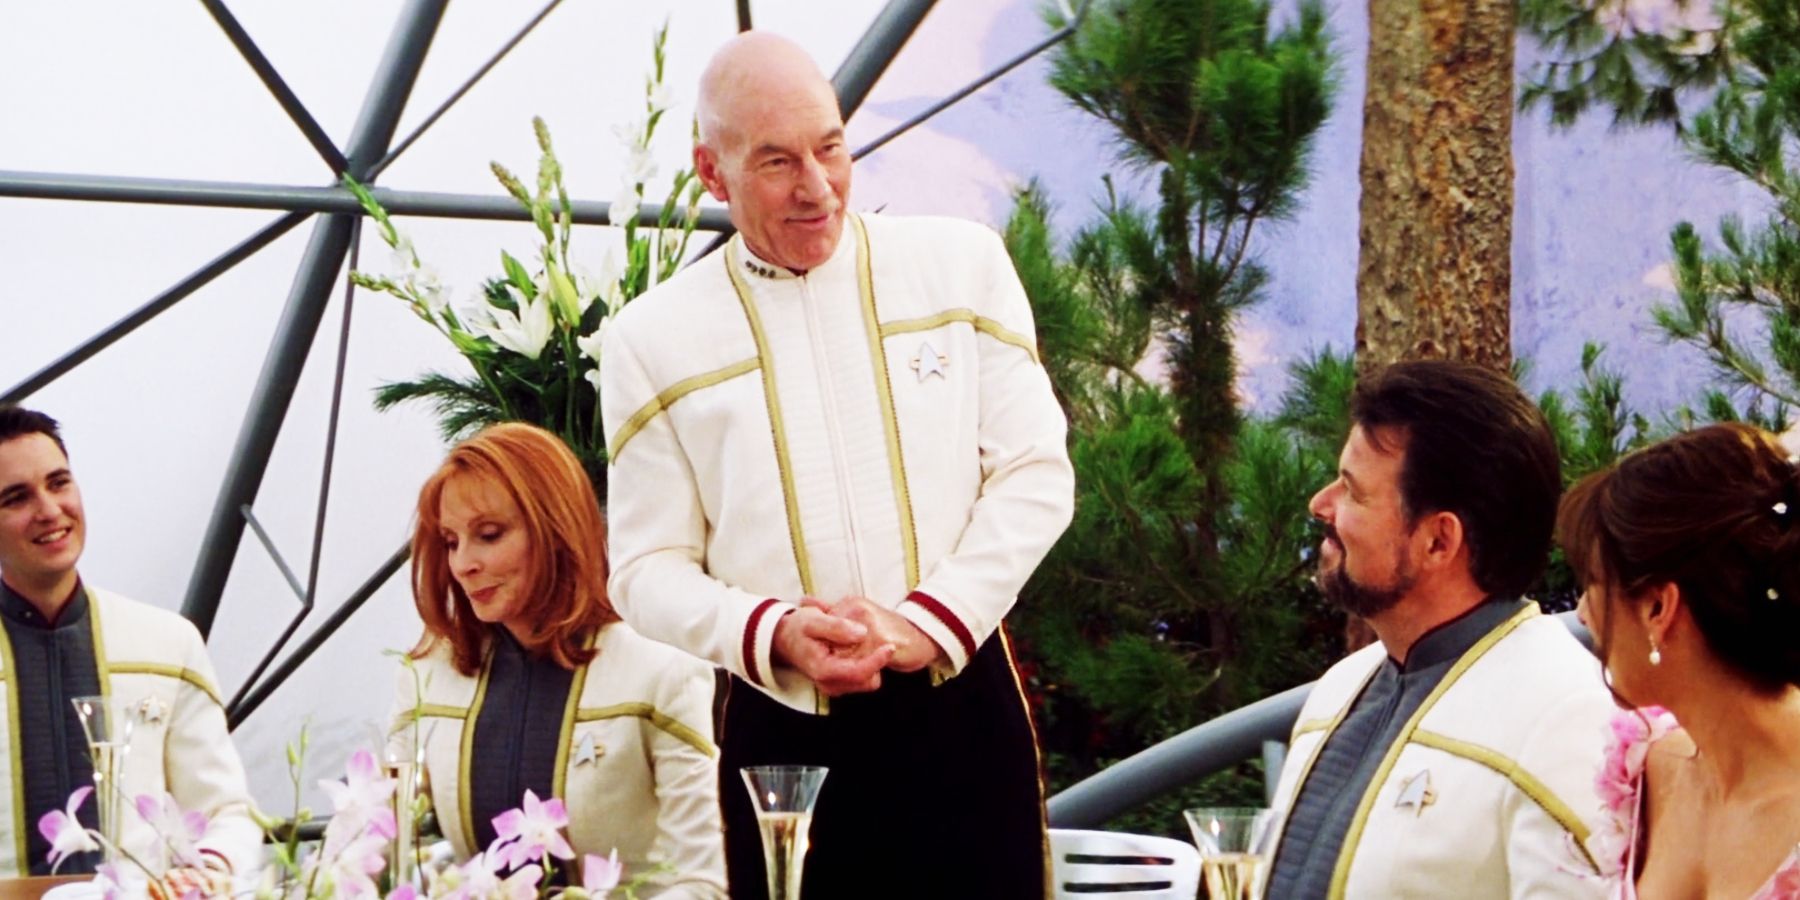 Wesley Crusher, Beverley Crusher, Jean-Luc Picard, Will Riker and Deanna Troi-Riker in Star Trek: Nemesis